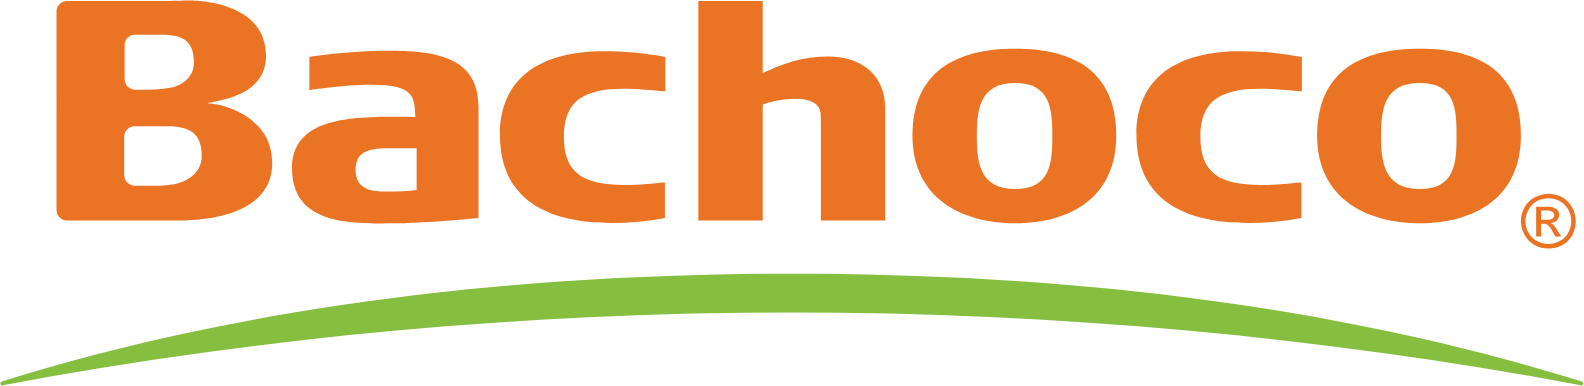 Bachoco
 logo large (transparent PNG)